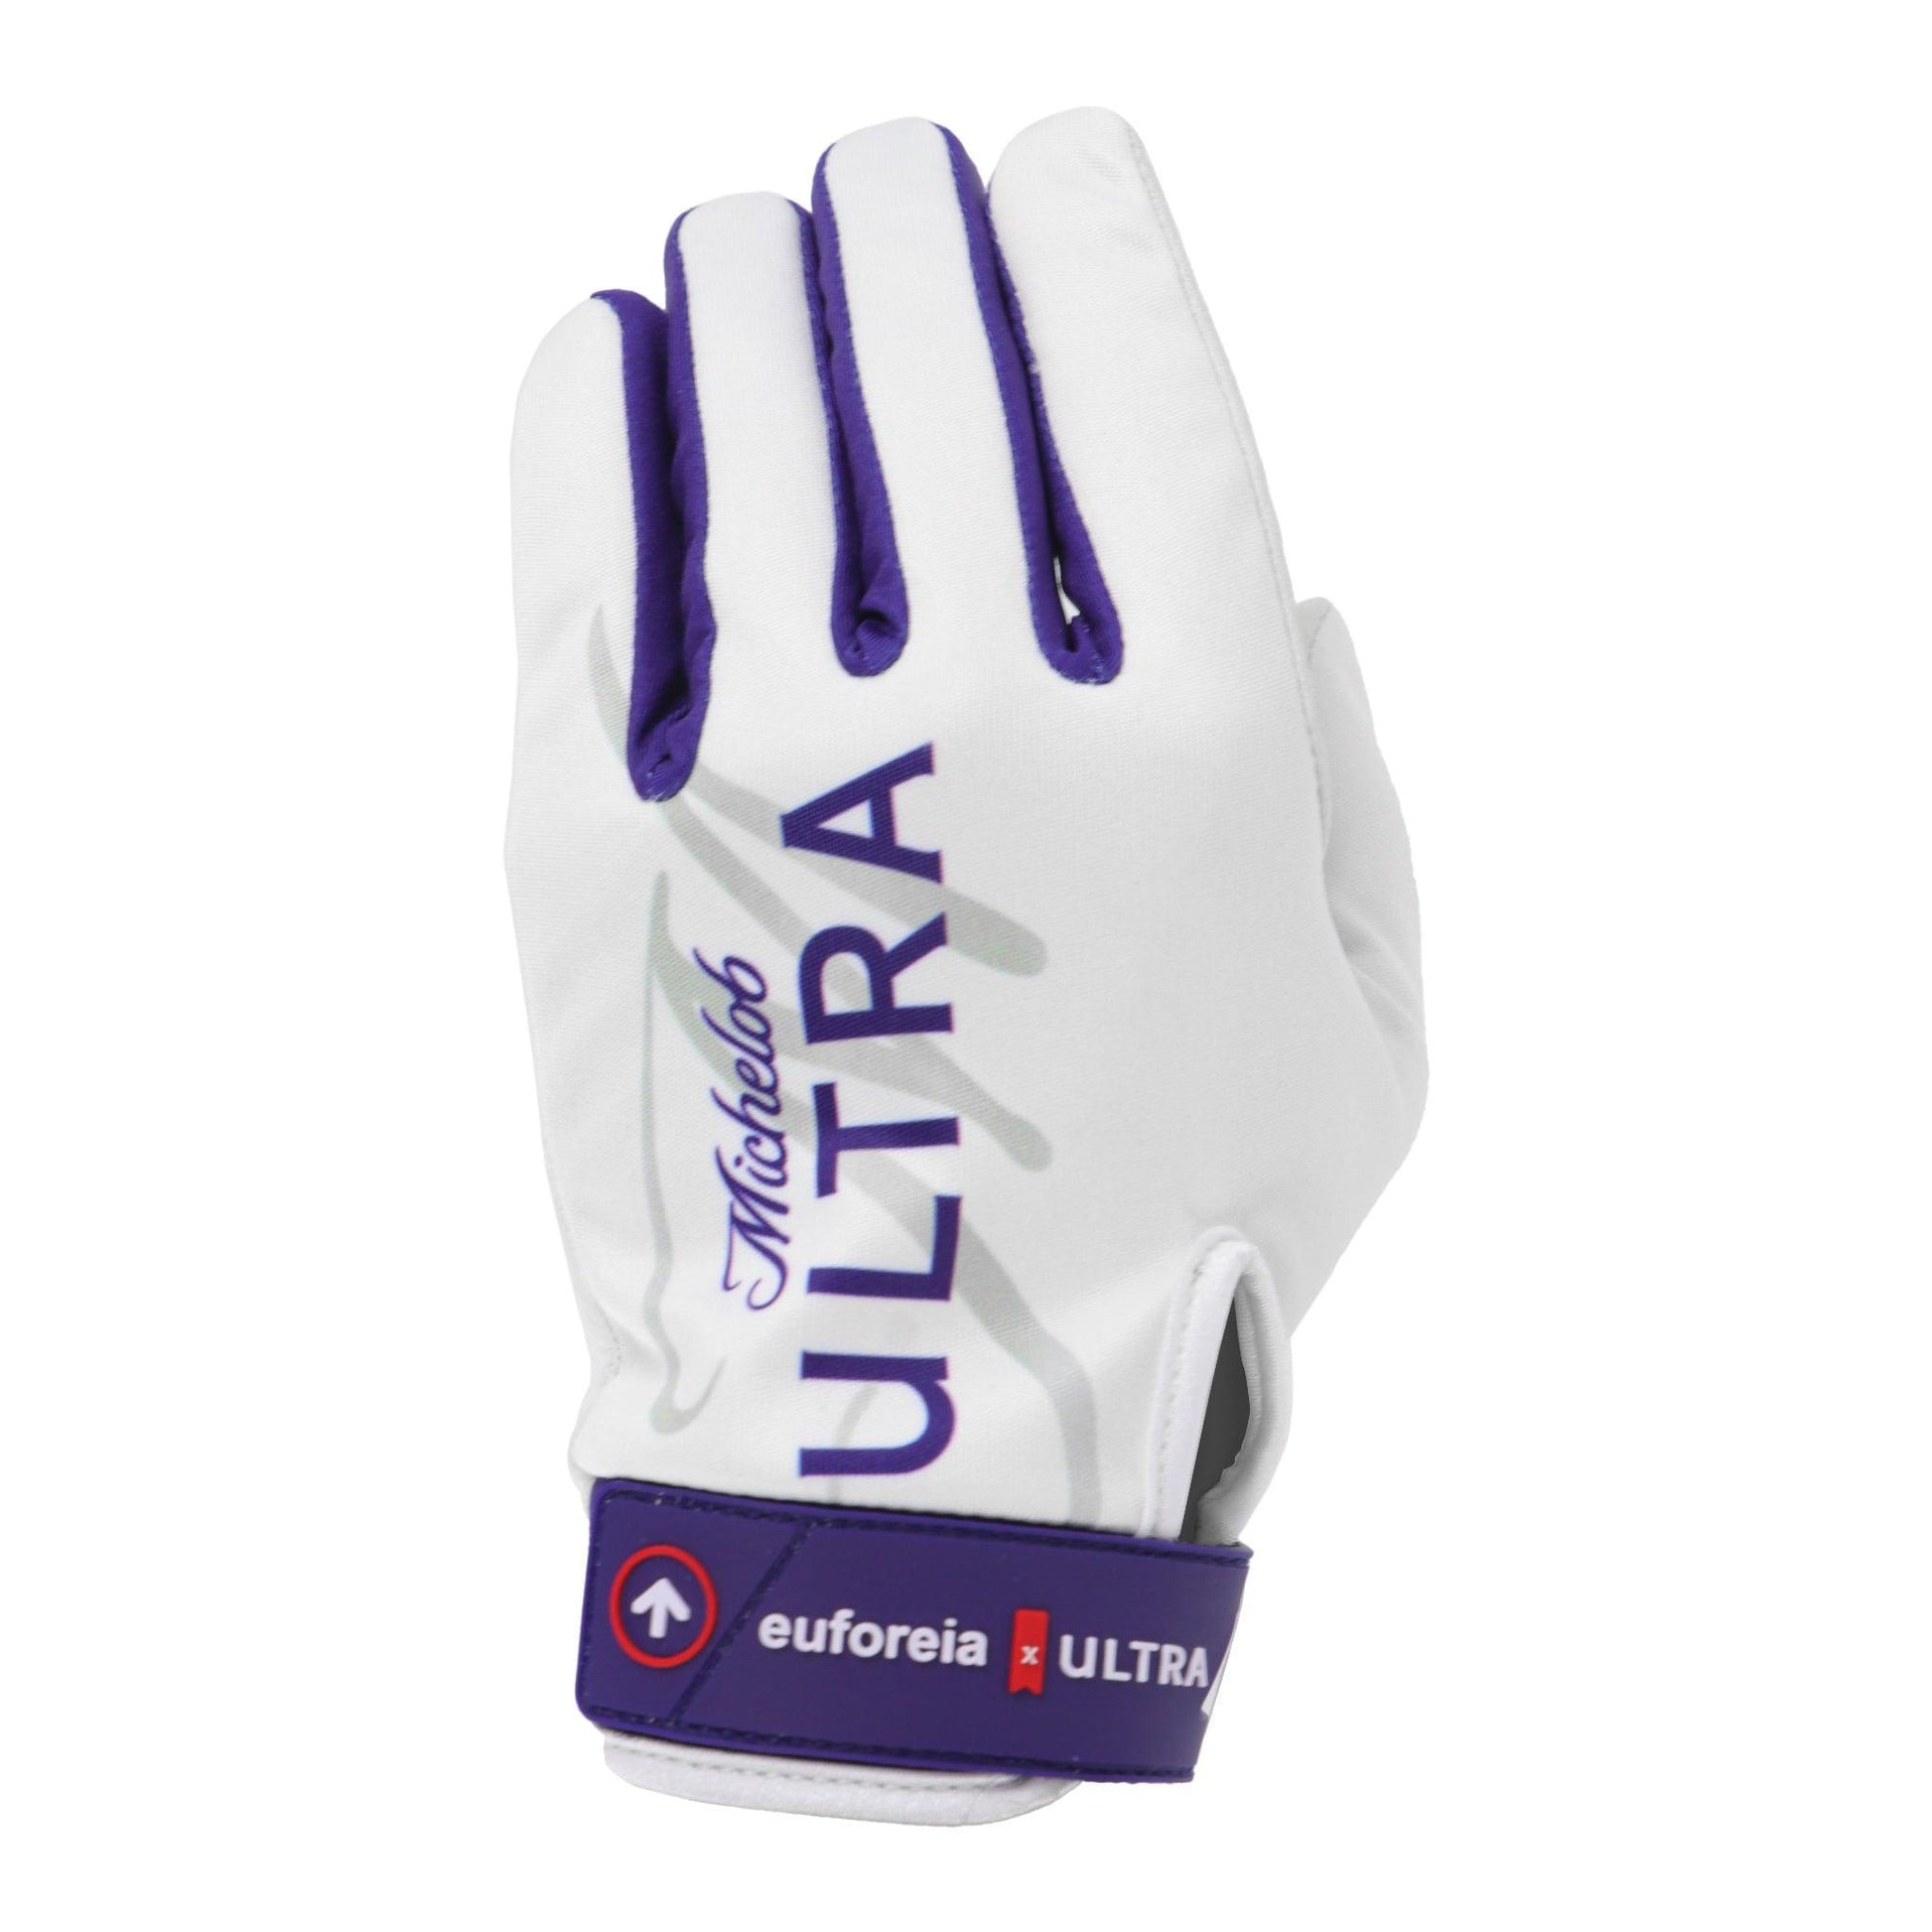 Michelob ULTRA Euforeia Primo Golf Glove - Top - Left Hand